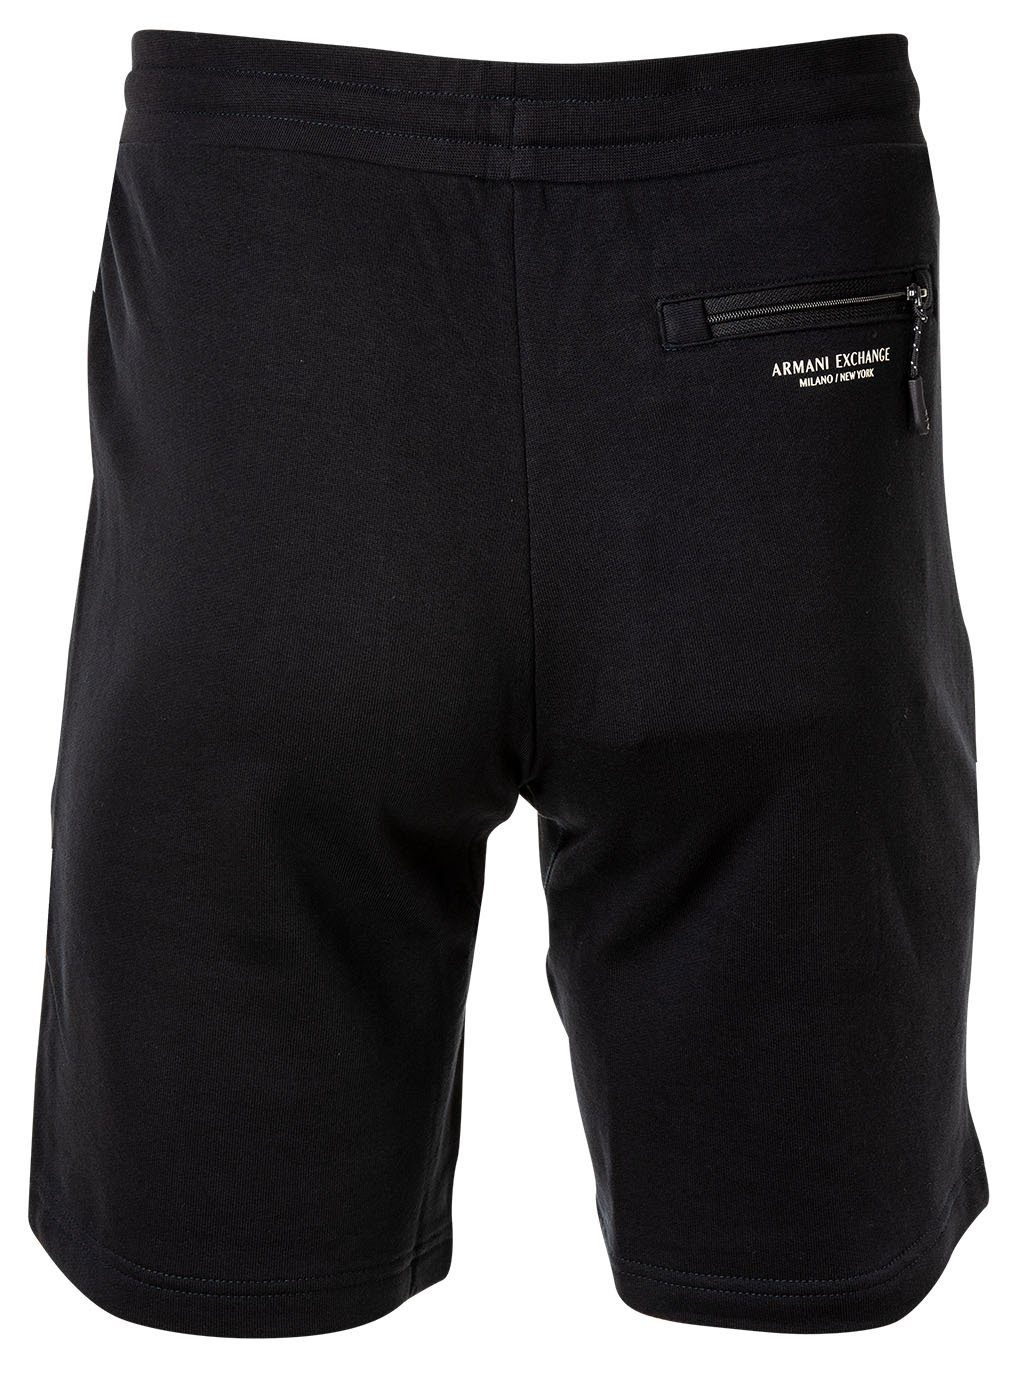 Herren - Pants, Loungewear ARMANI EXCHANGE Marine kurz Sweatshorts Jogginghose